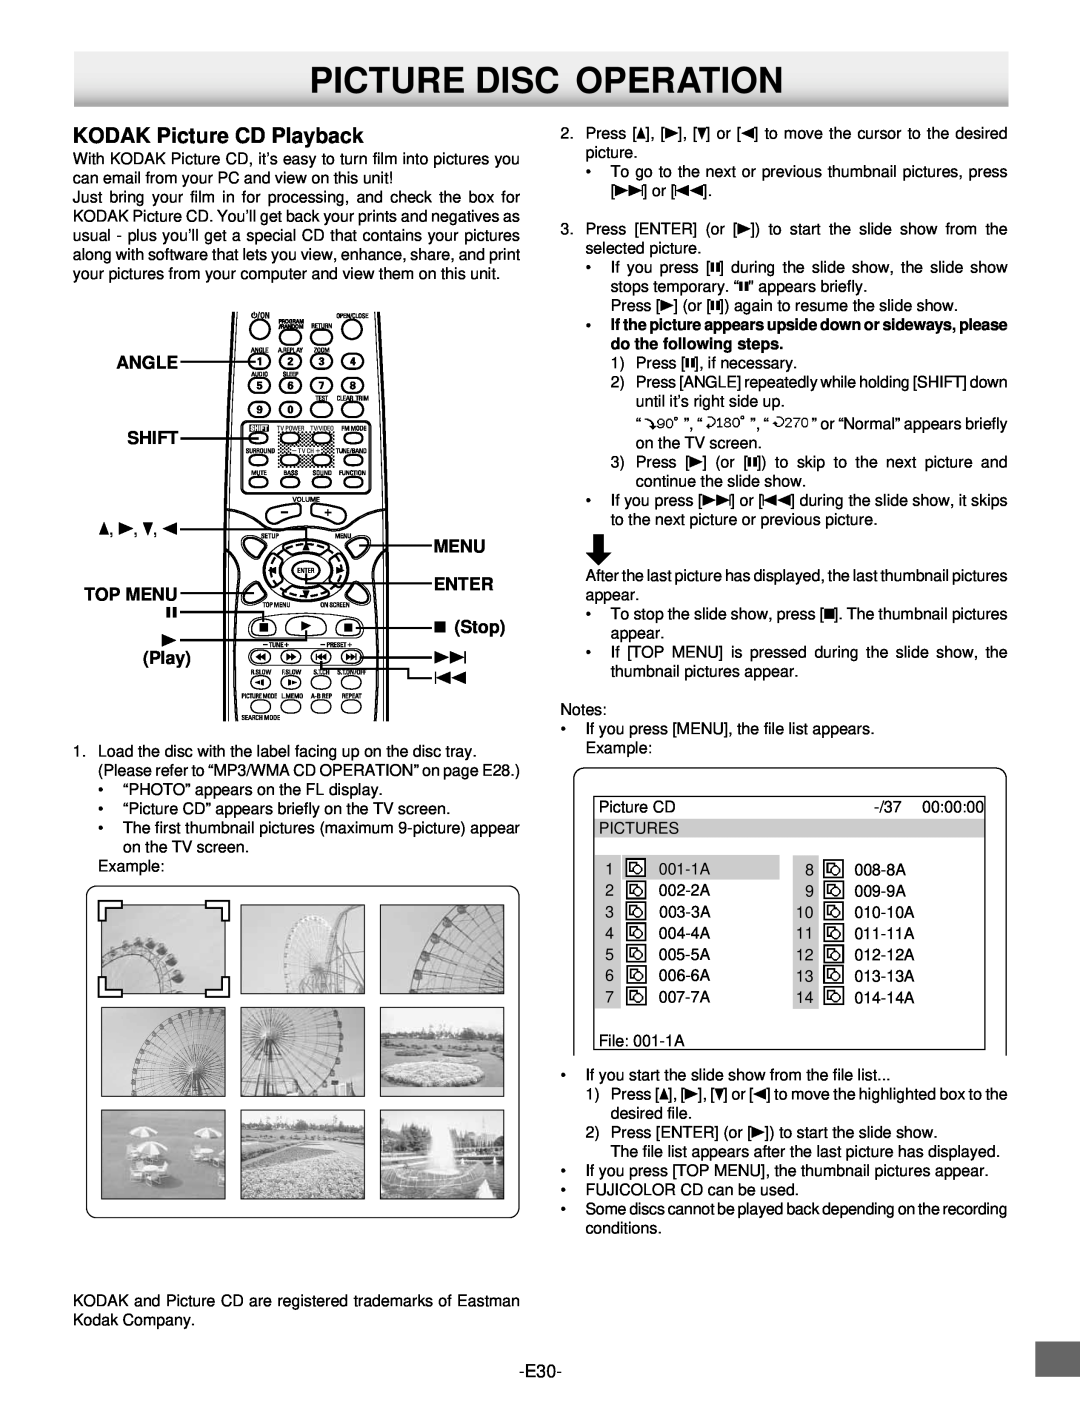 Sanyo DWM-2500 instruction manual Picture Disc Operation, KODAK Picture CD Playback 